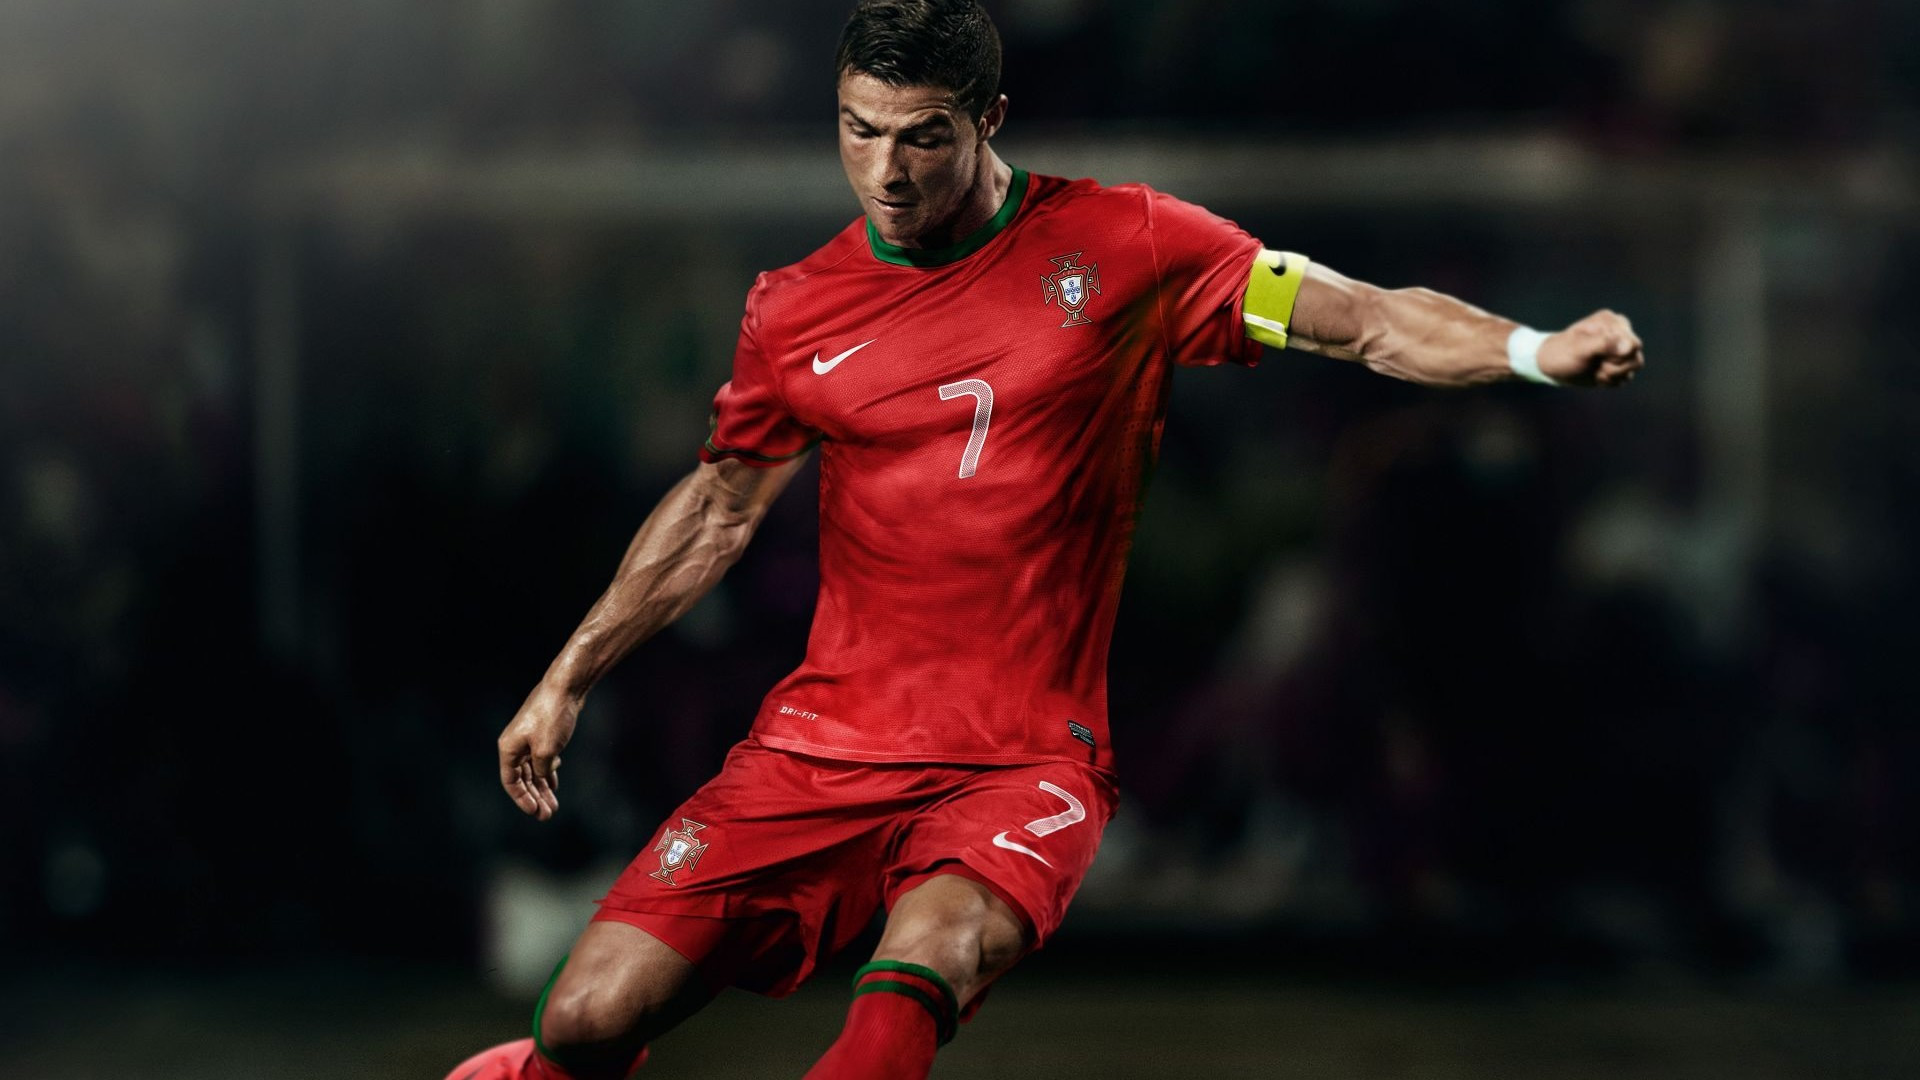 300 Cristiano Ronaldo Wallpaper Hd Portugal Images Myweb